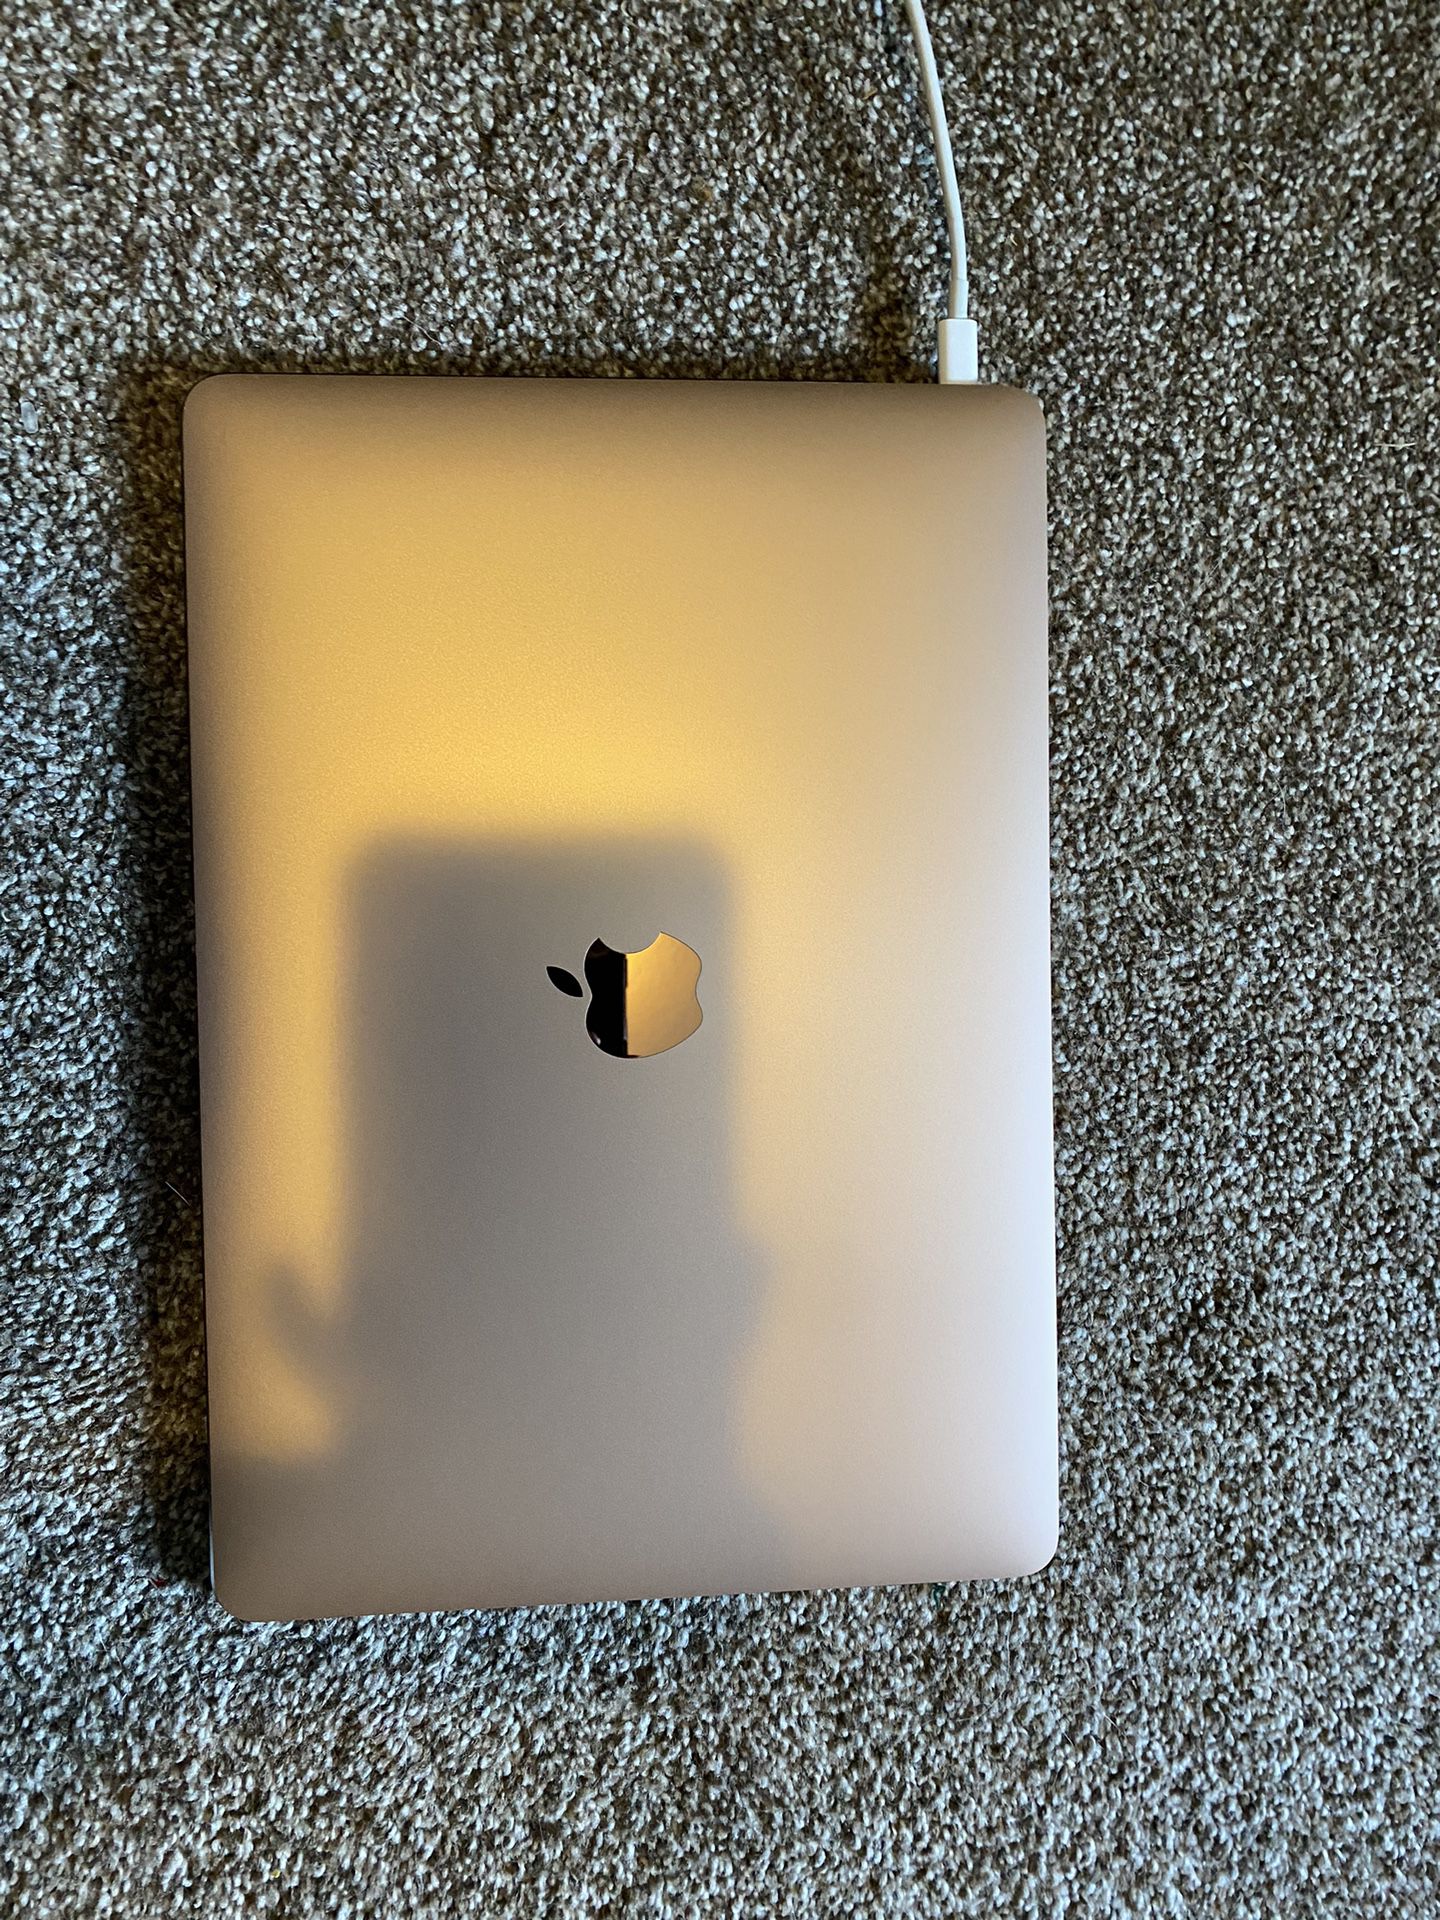 Macbook Air Gold